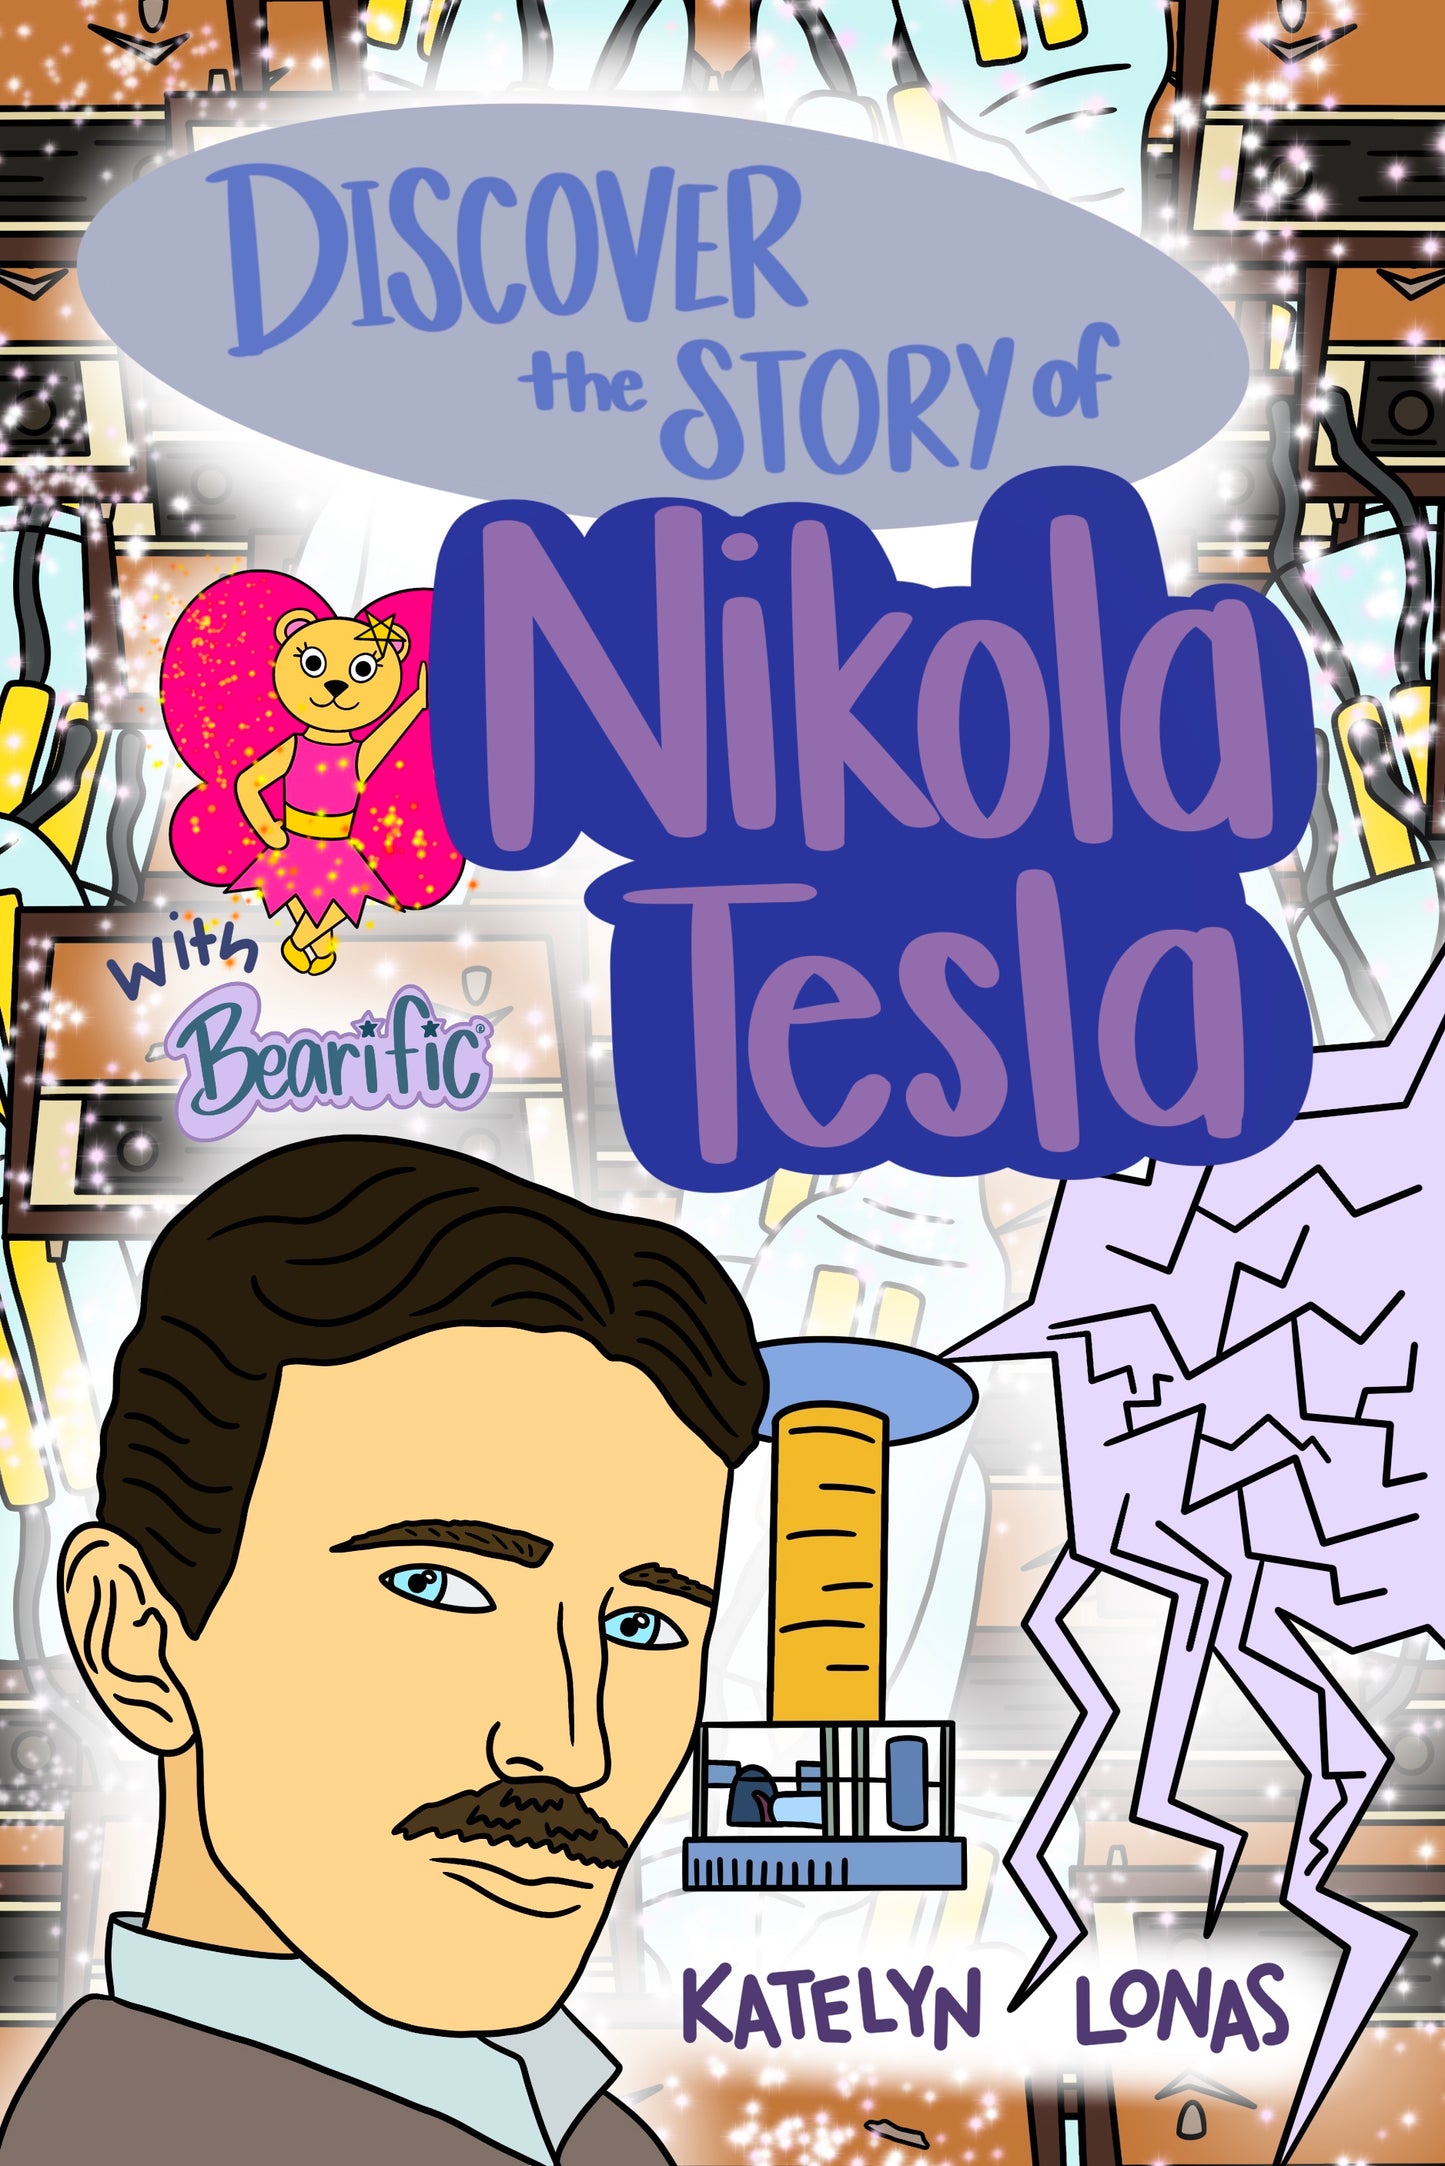 Discover The Story Of Nikola Tesla with Bearific®